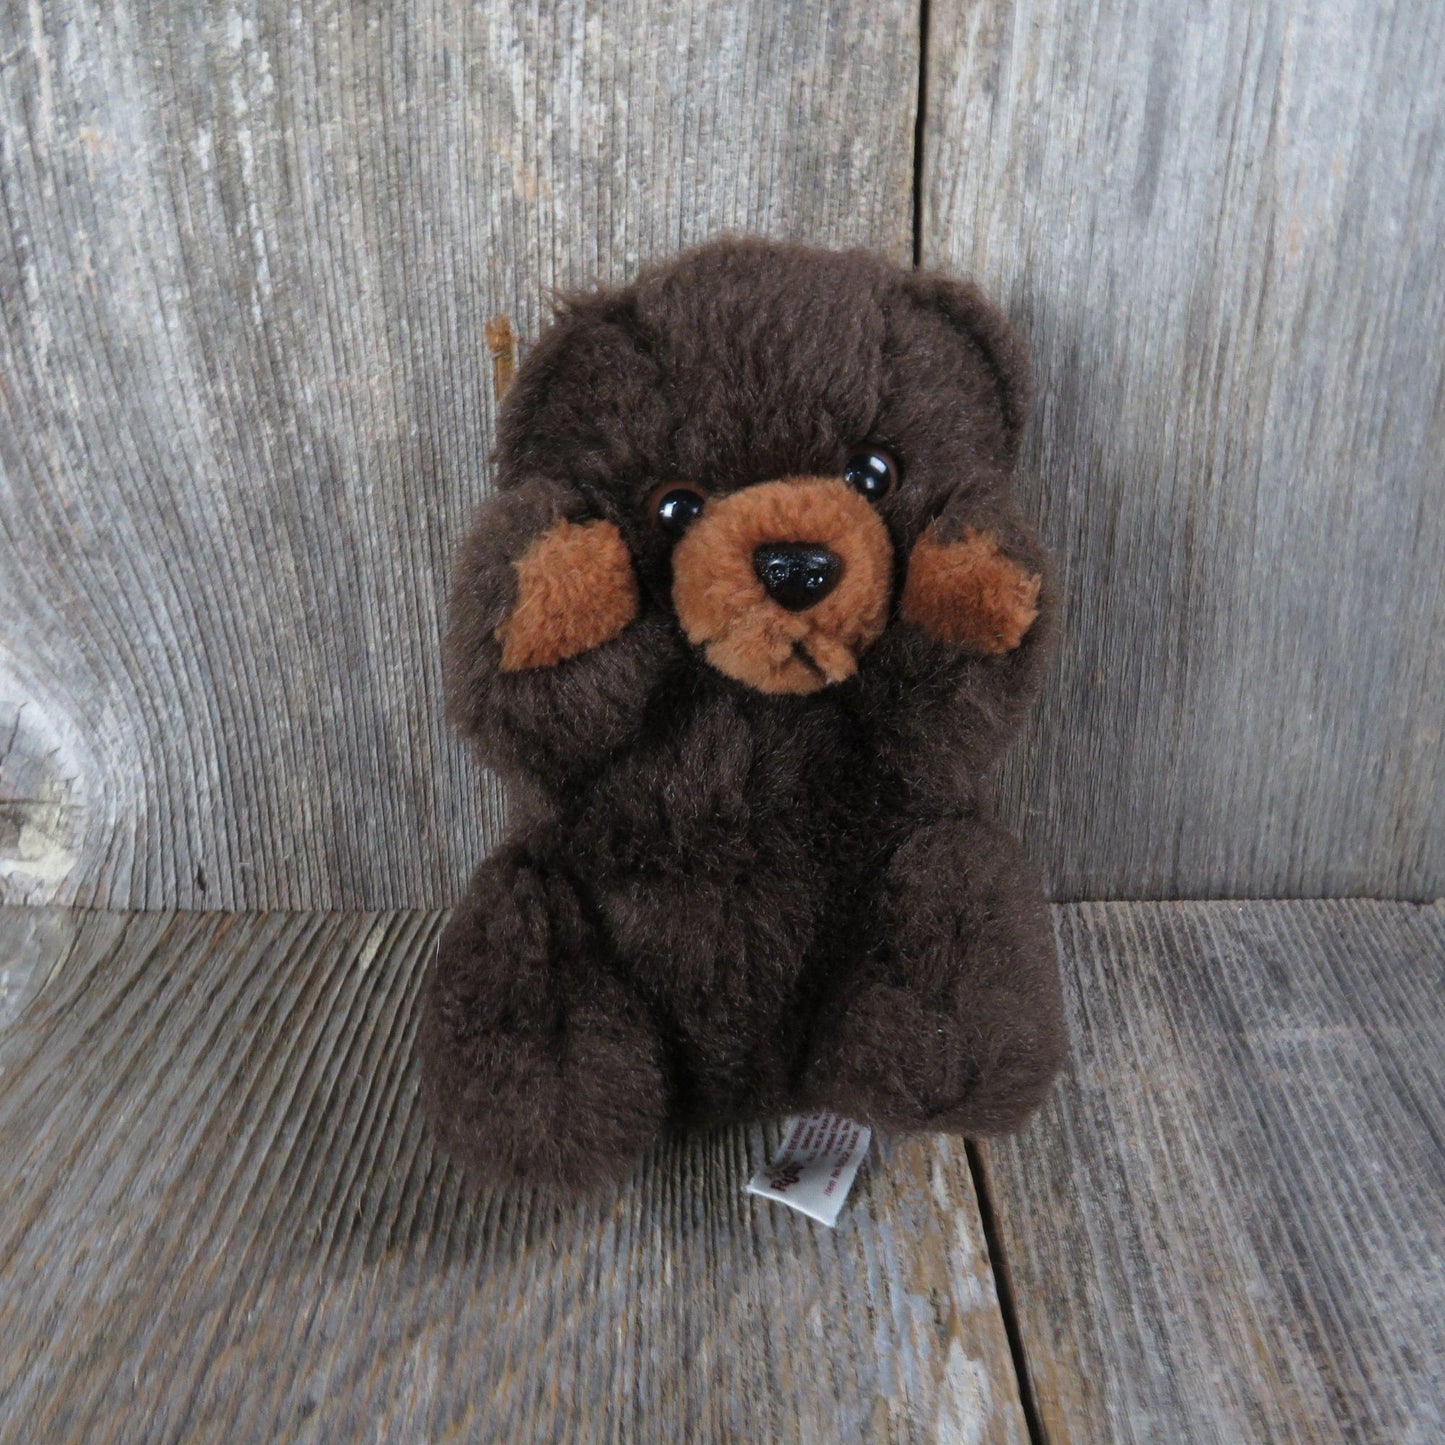 Vintage Teddy Bear Plush Brown Mini Russ Grizzly Love Pets Stuffed Animal Korea Short Legs